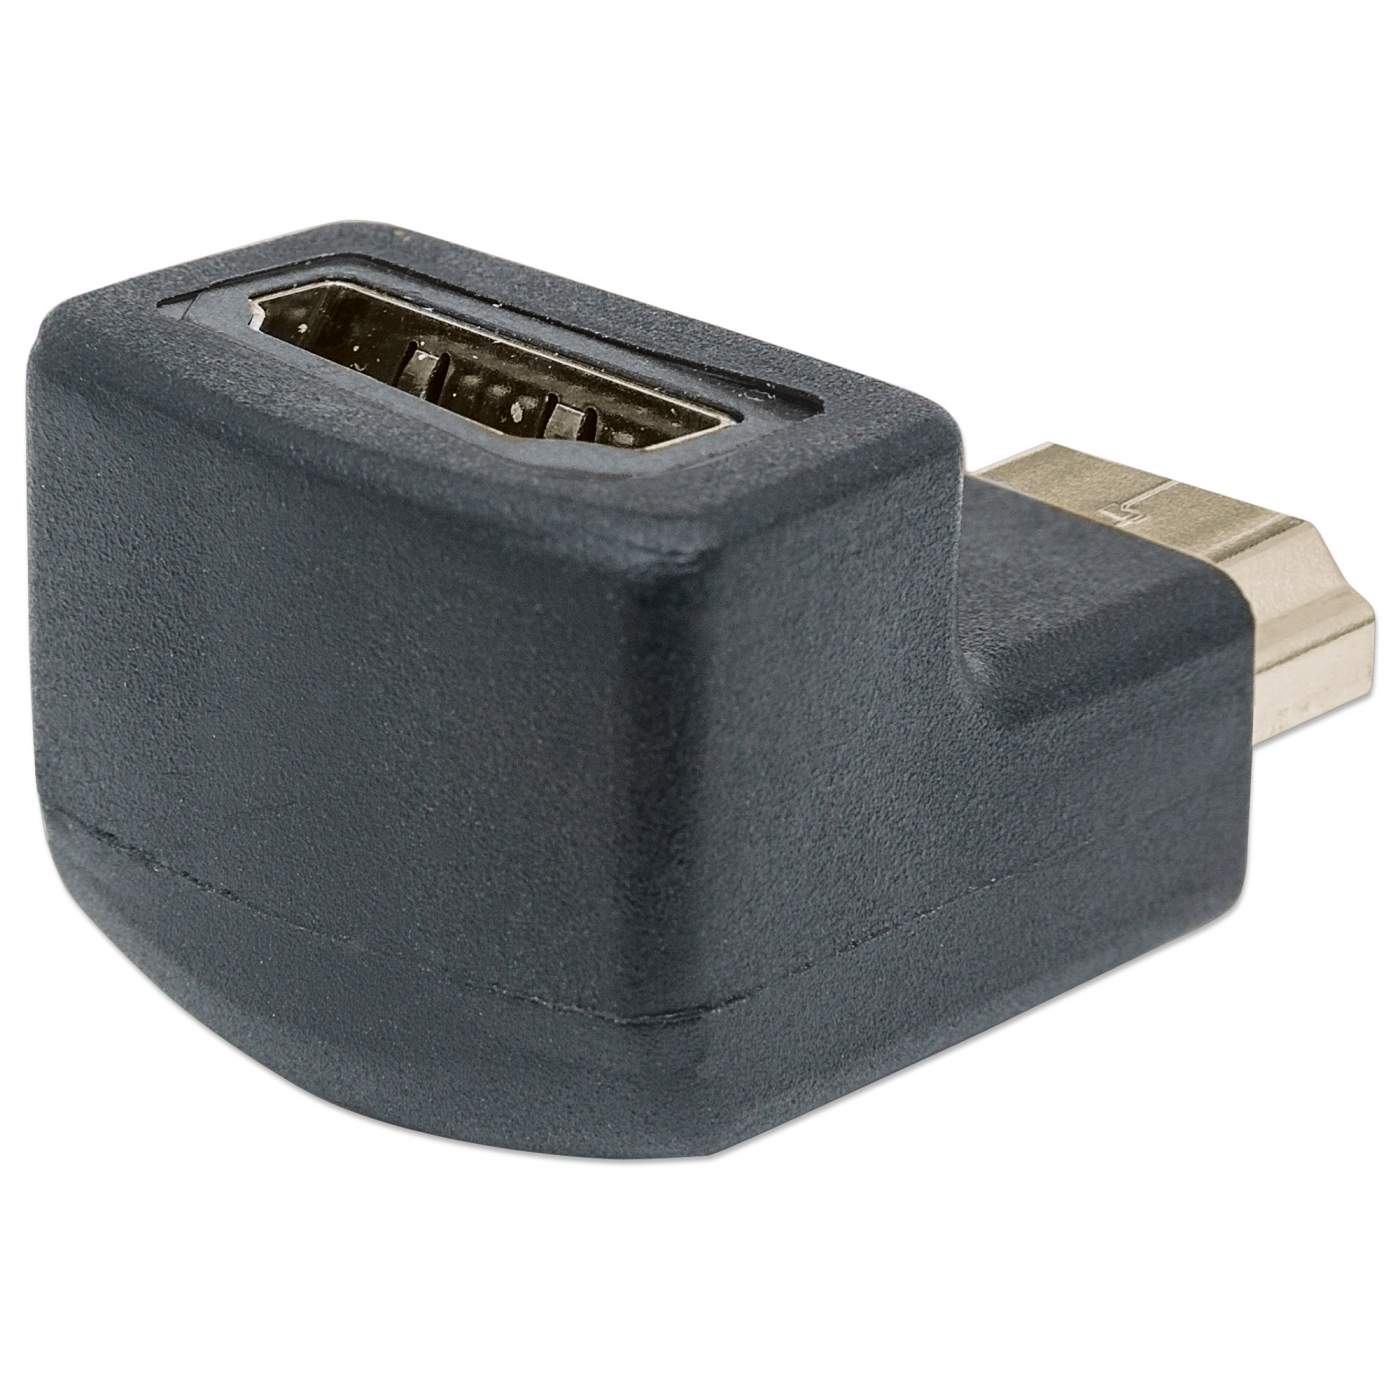 HDMI Adapter Image 4